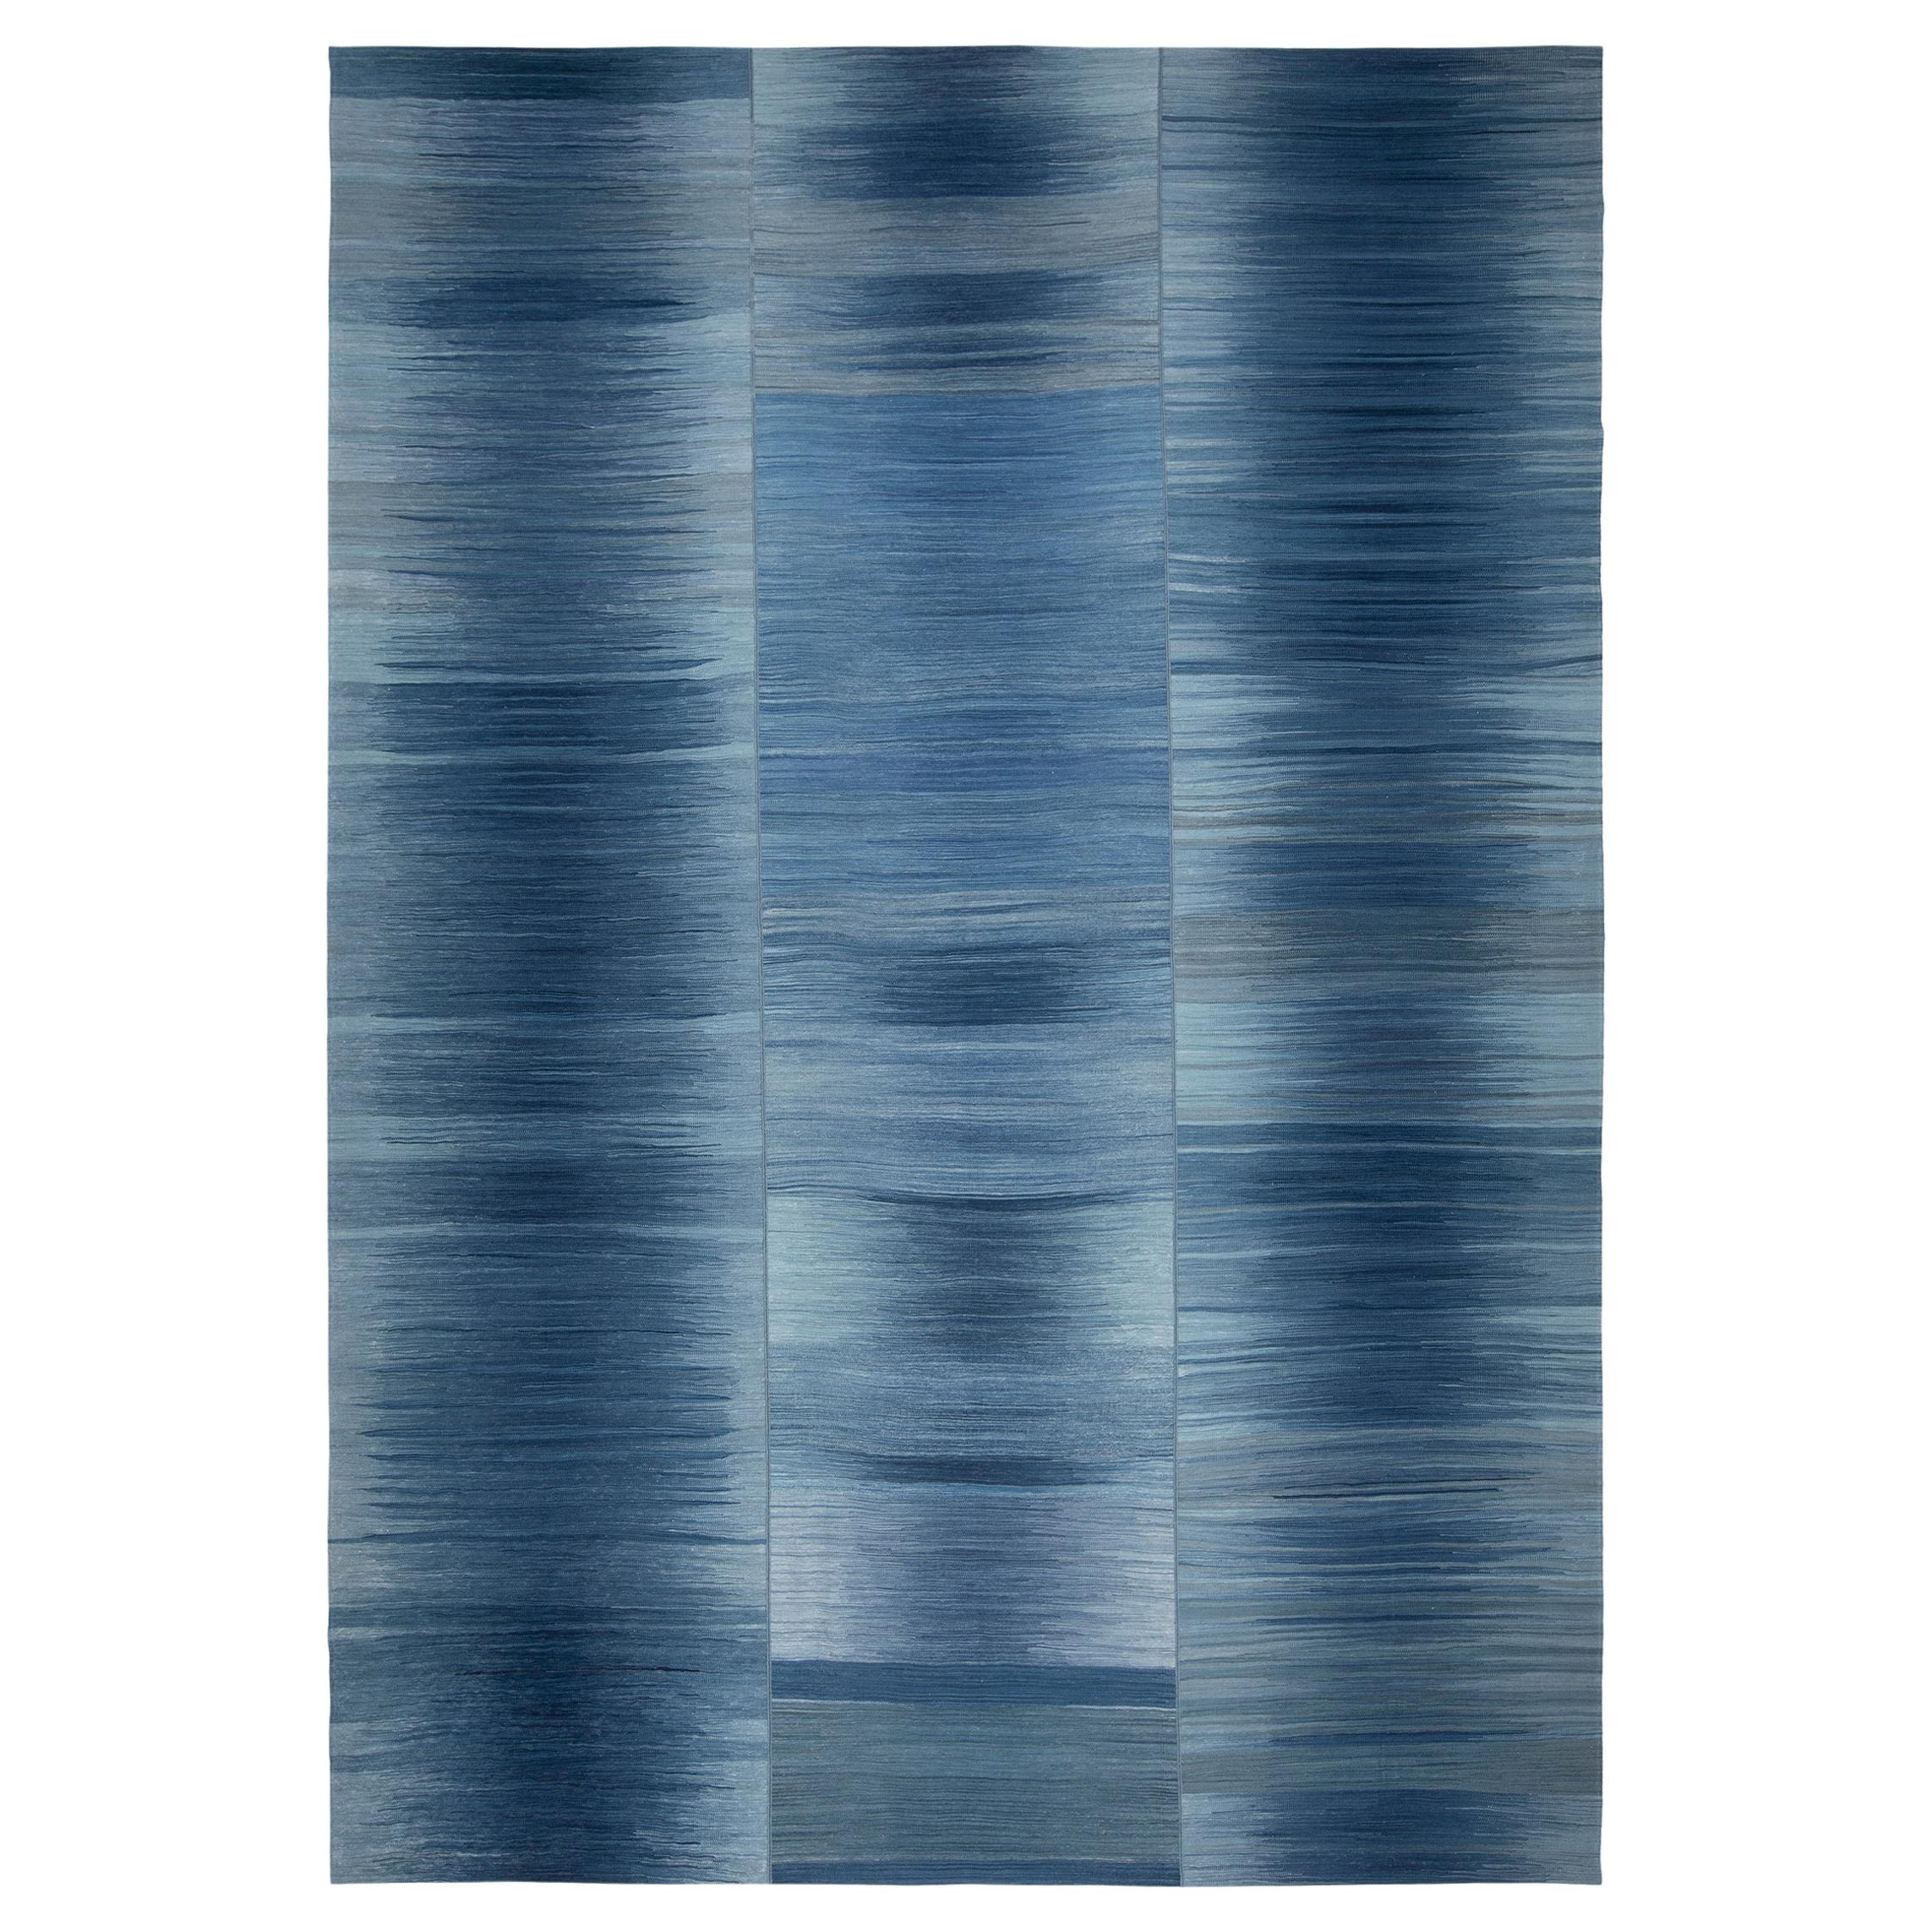 Modern Mazandaran Style Handwoven Flatweave Rug in Shades of Blue